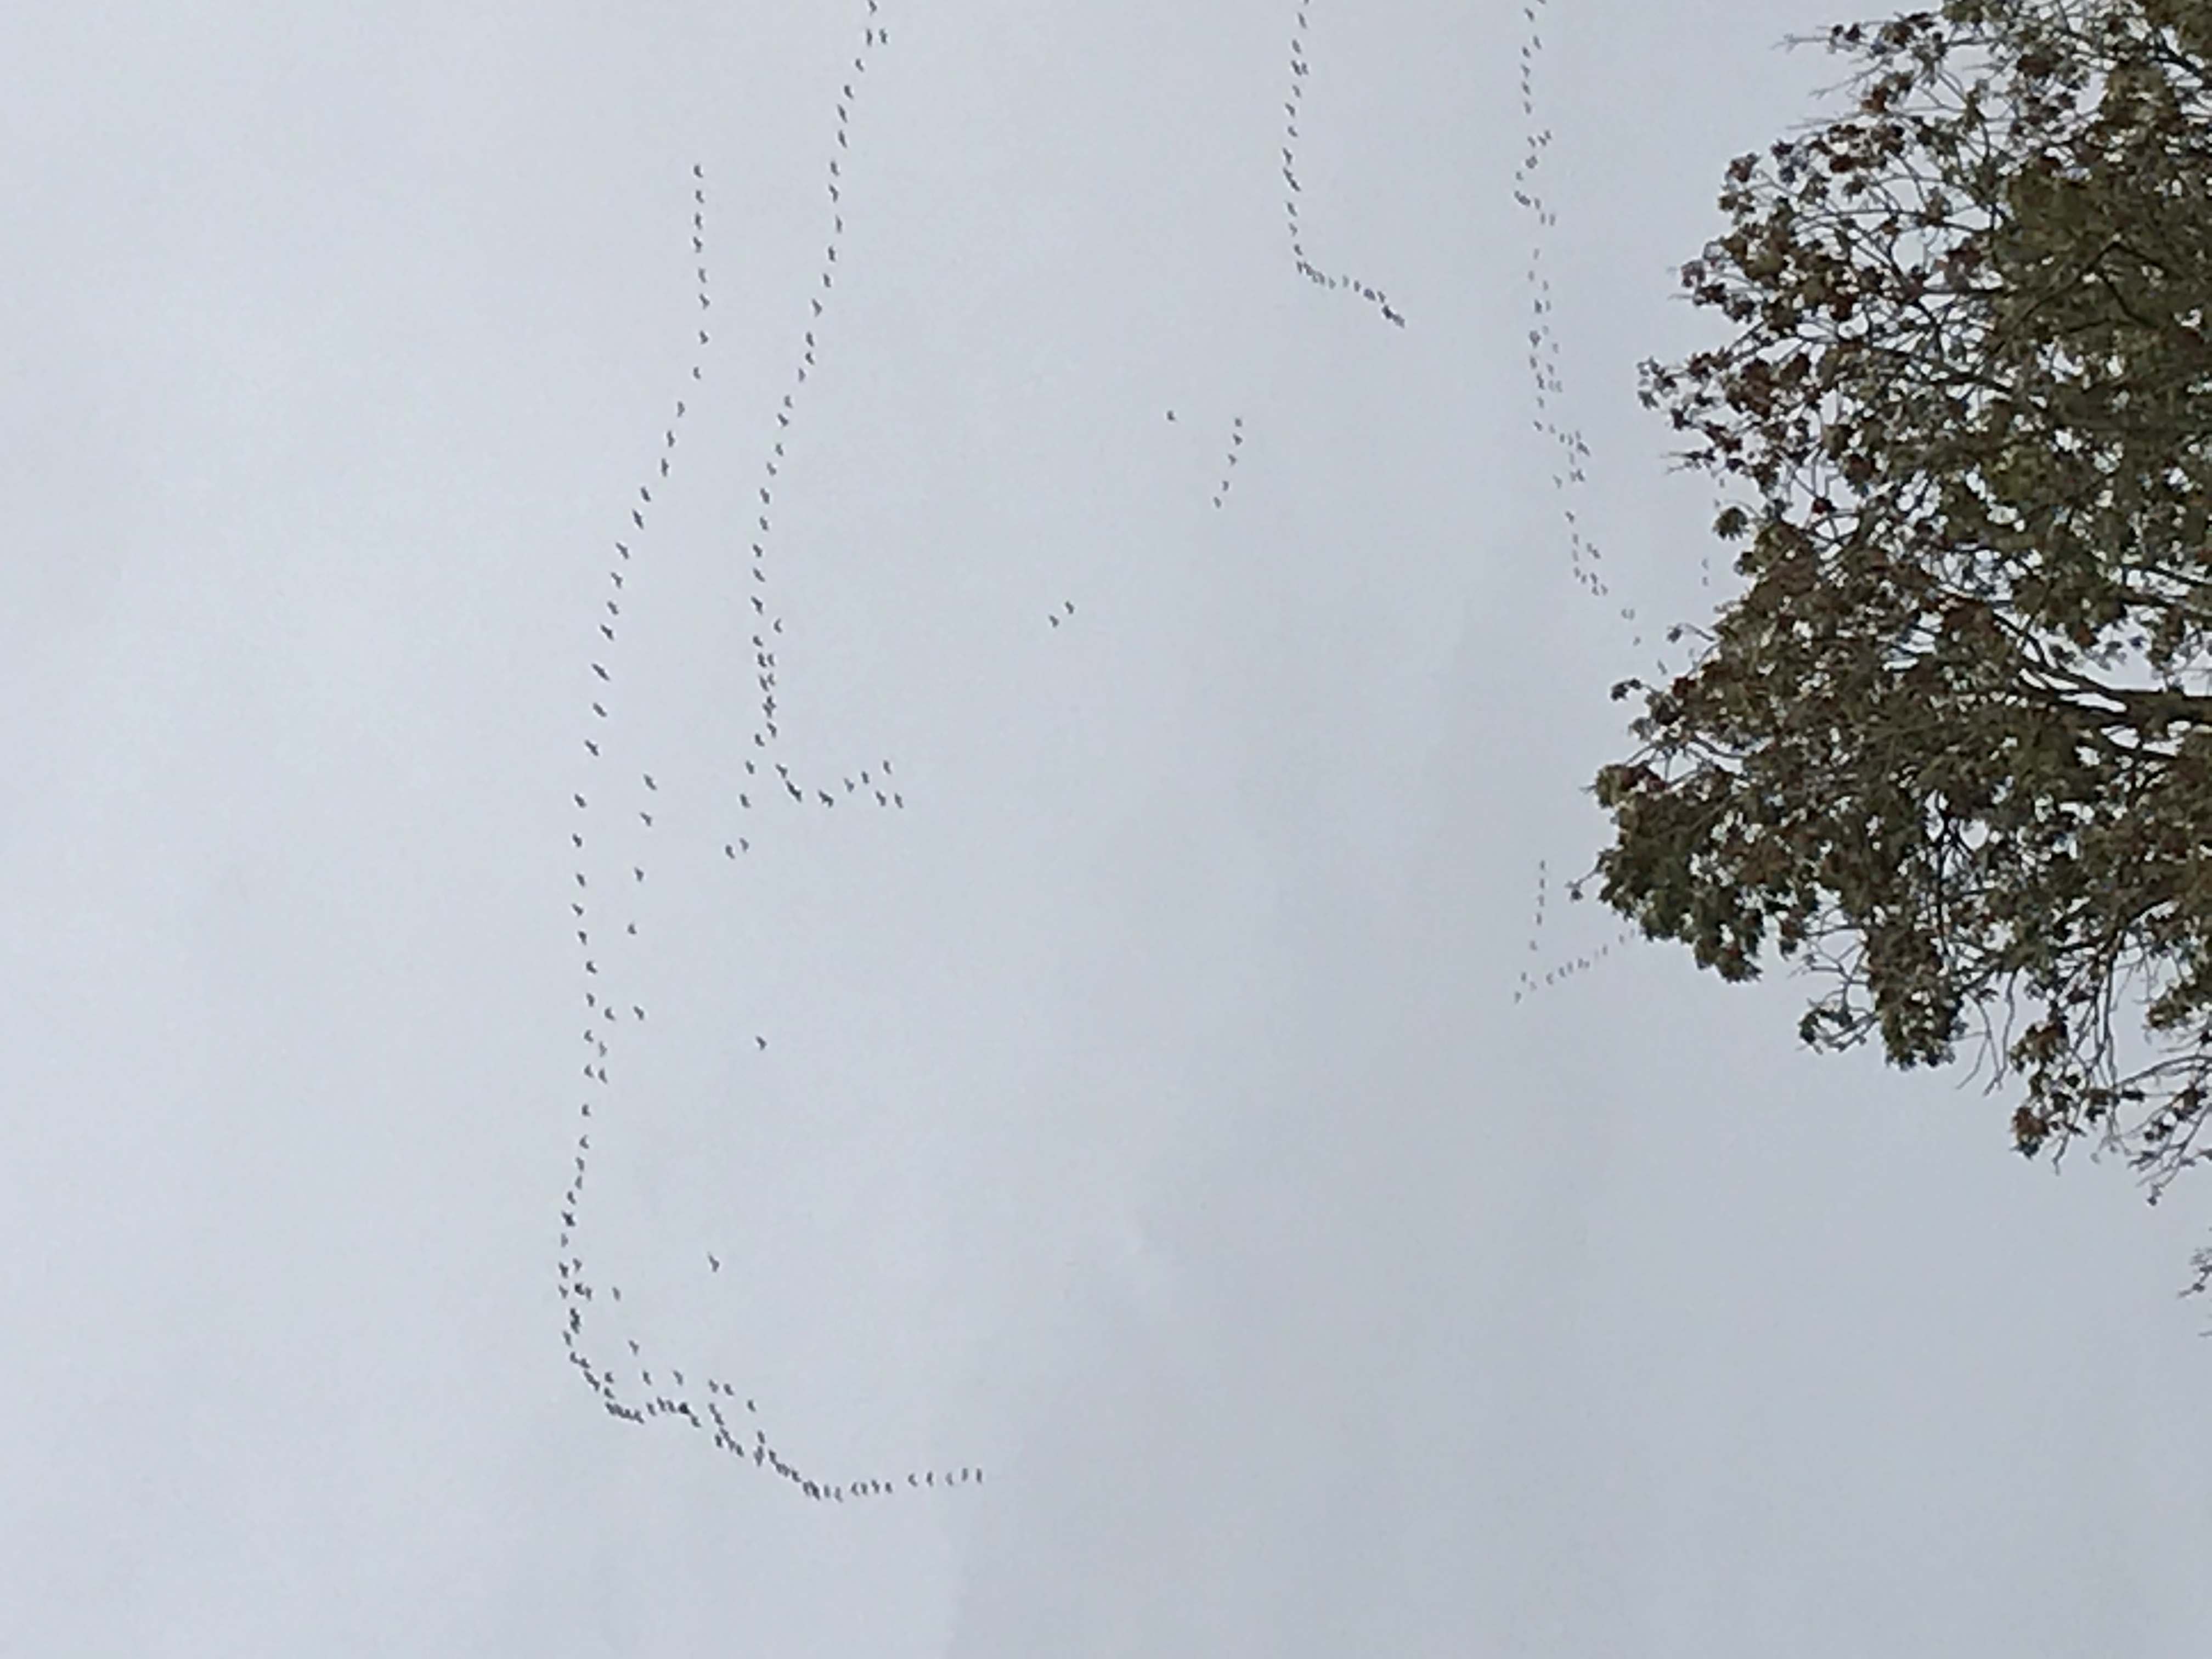 A flock of birds flying through a cloudy sky - Pistonheads